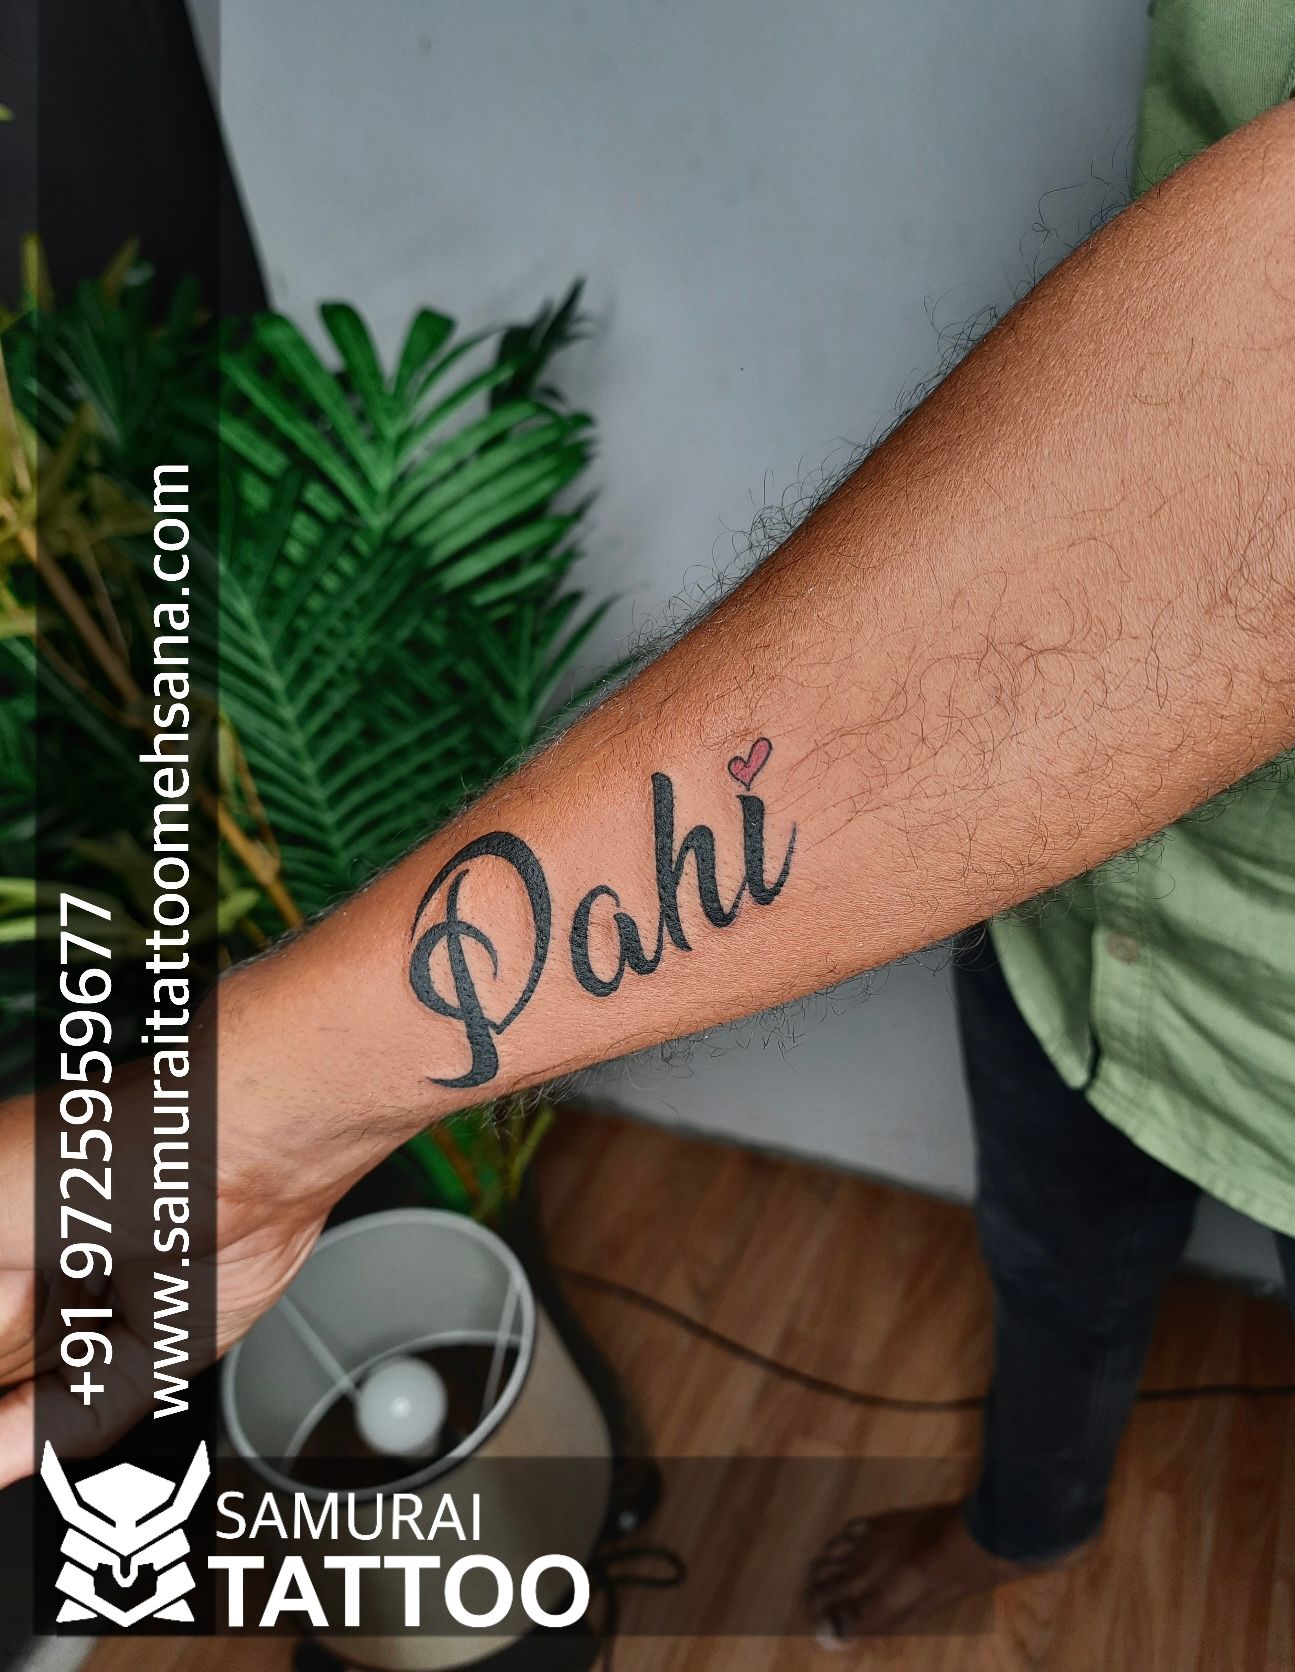 Abhi name tattoo  name tattoo design  name tattoo fonts  Abhi tattoo   YouTube